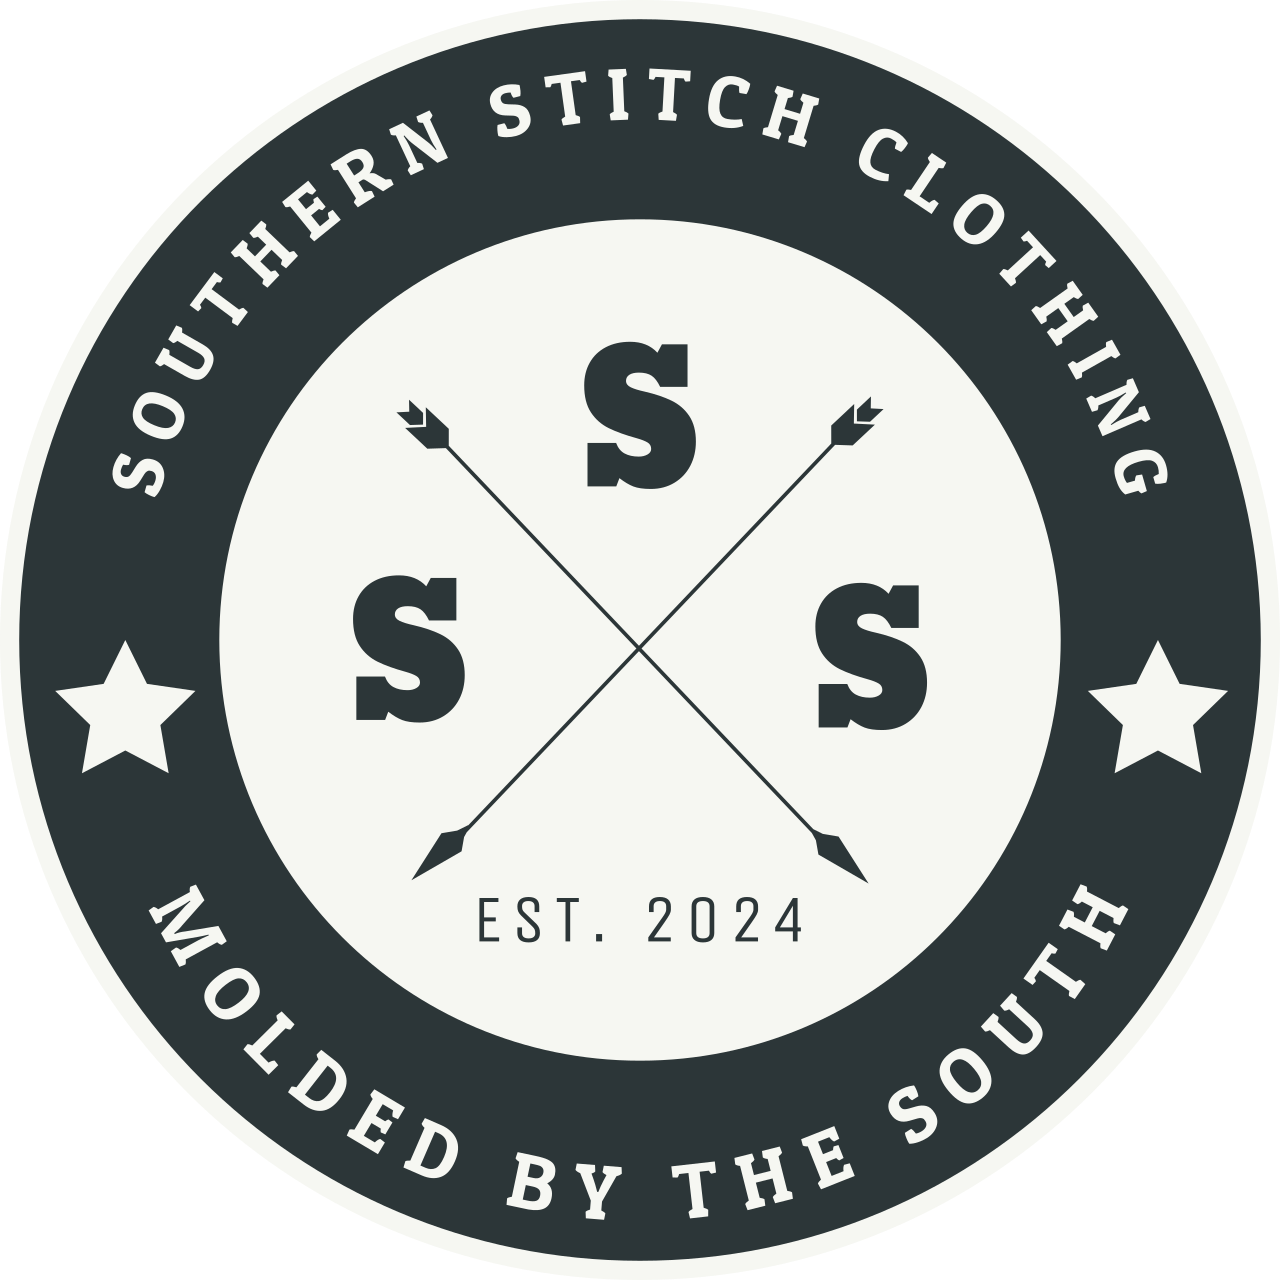 SOUTHERN STITCH CLOTHING's logo